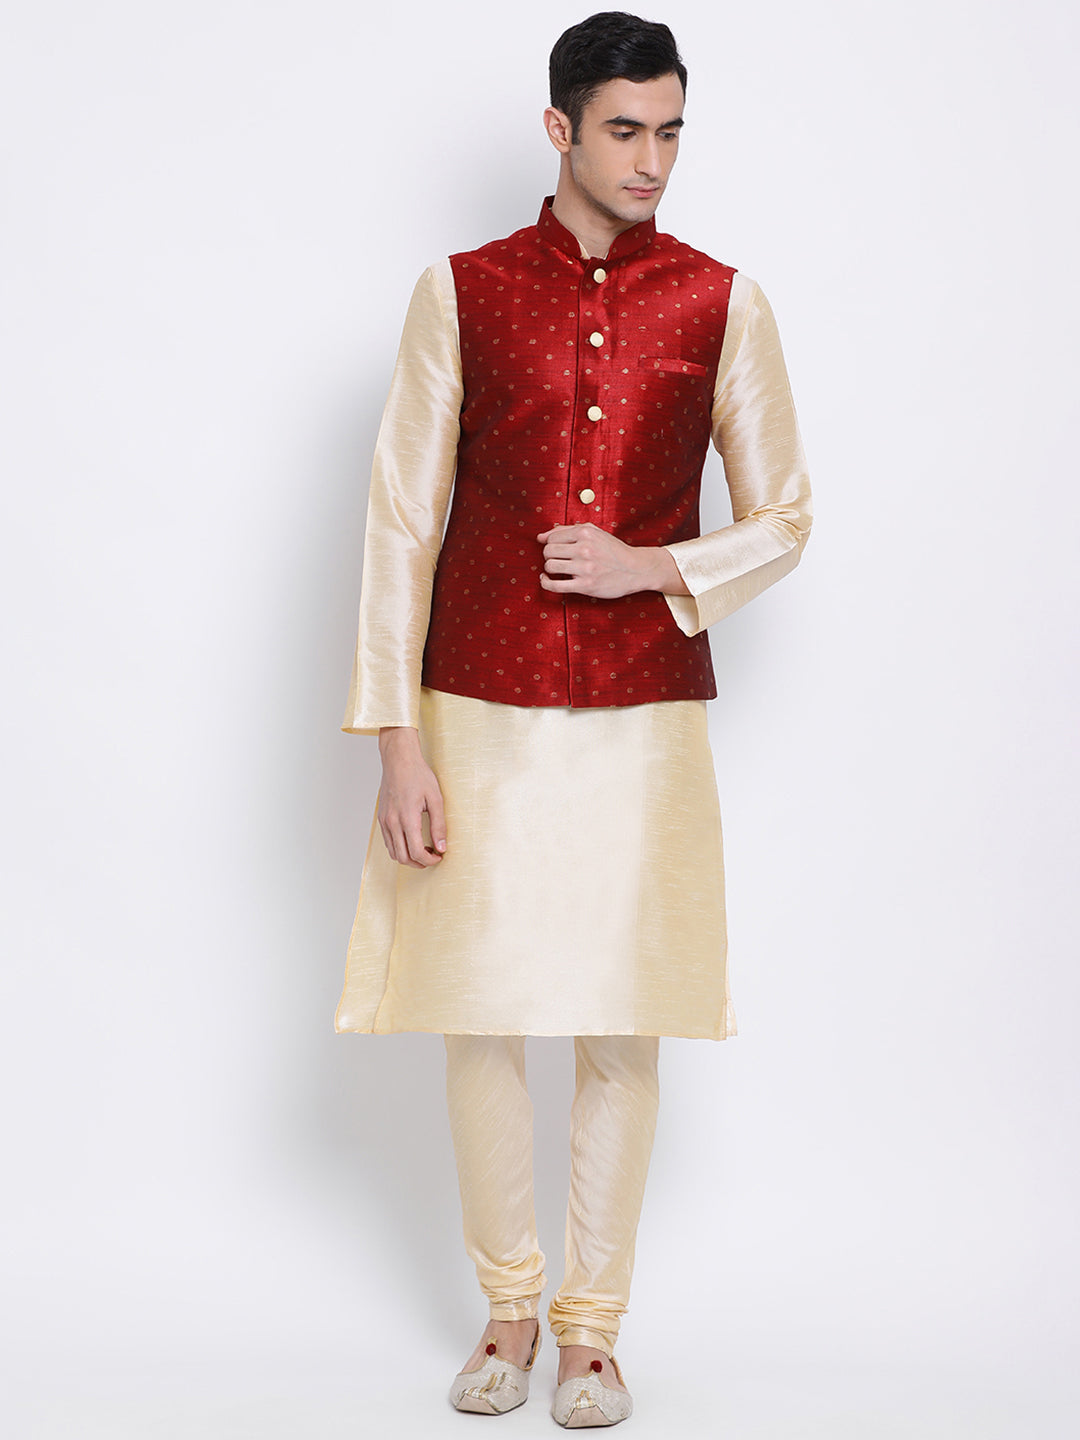 O.M New Stylish Ethnic Blended Nehru/Modi Jacket waistcoat Maroon/Grey  Special Limited Offer - flybuy.in